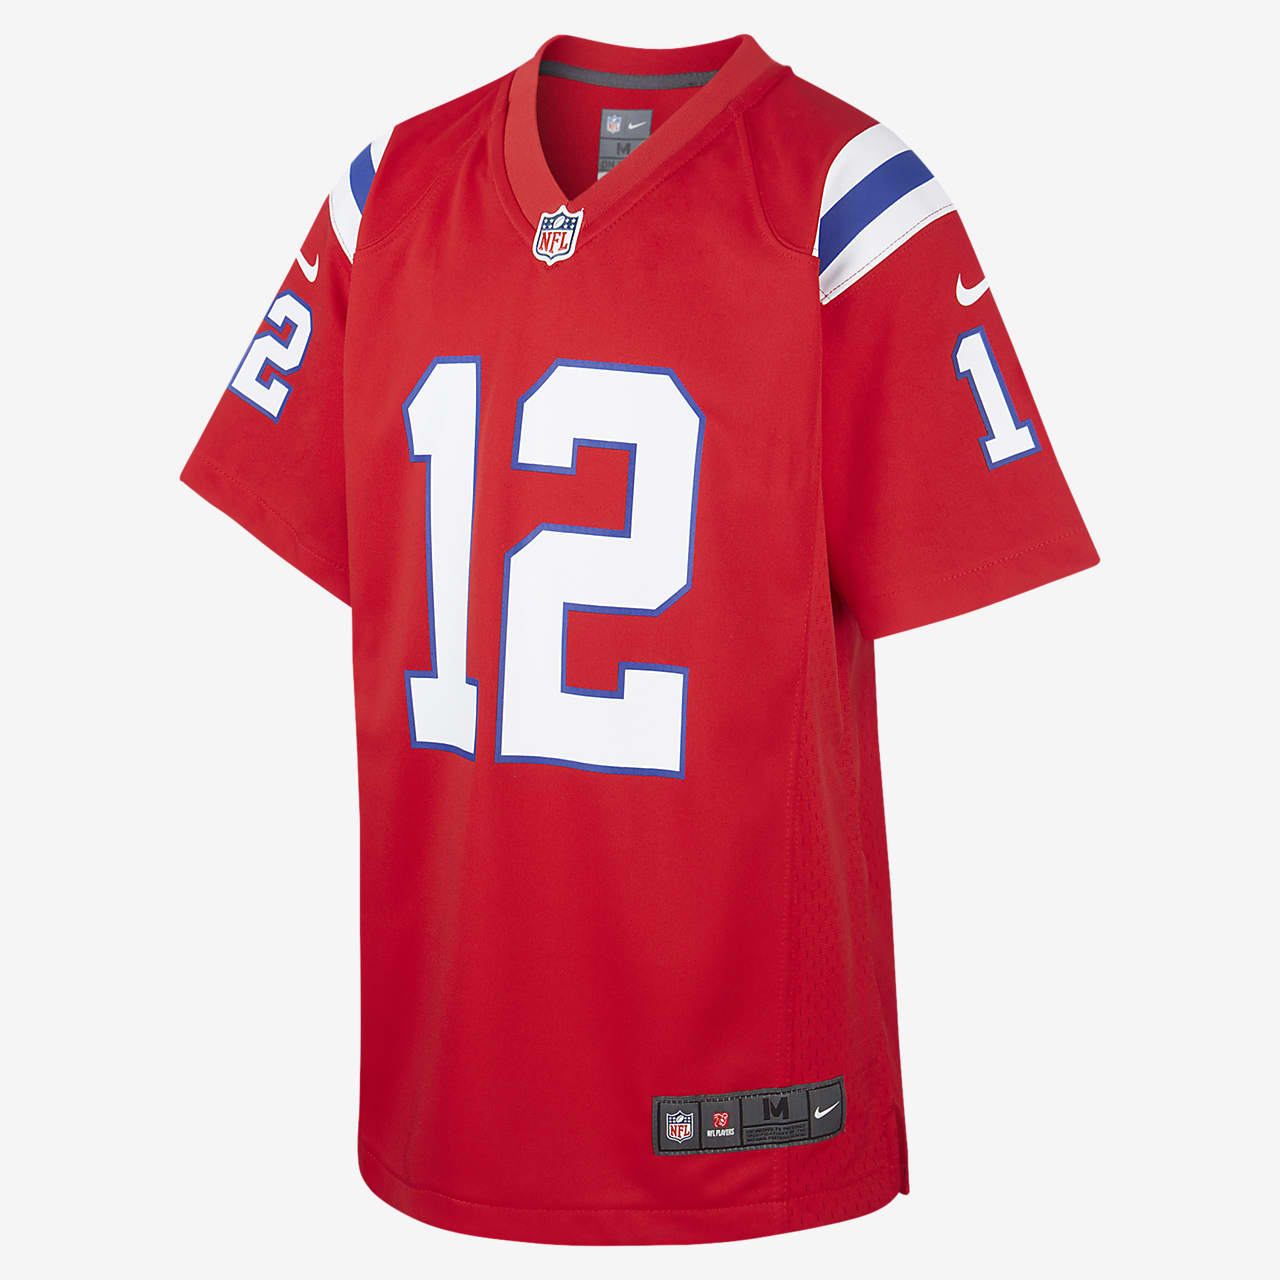 NFL New England Patriots (Tom Brady) Older Kids' Game Jersey